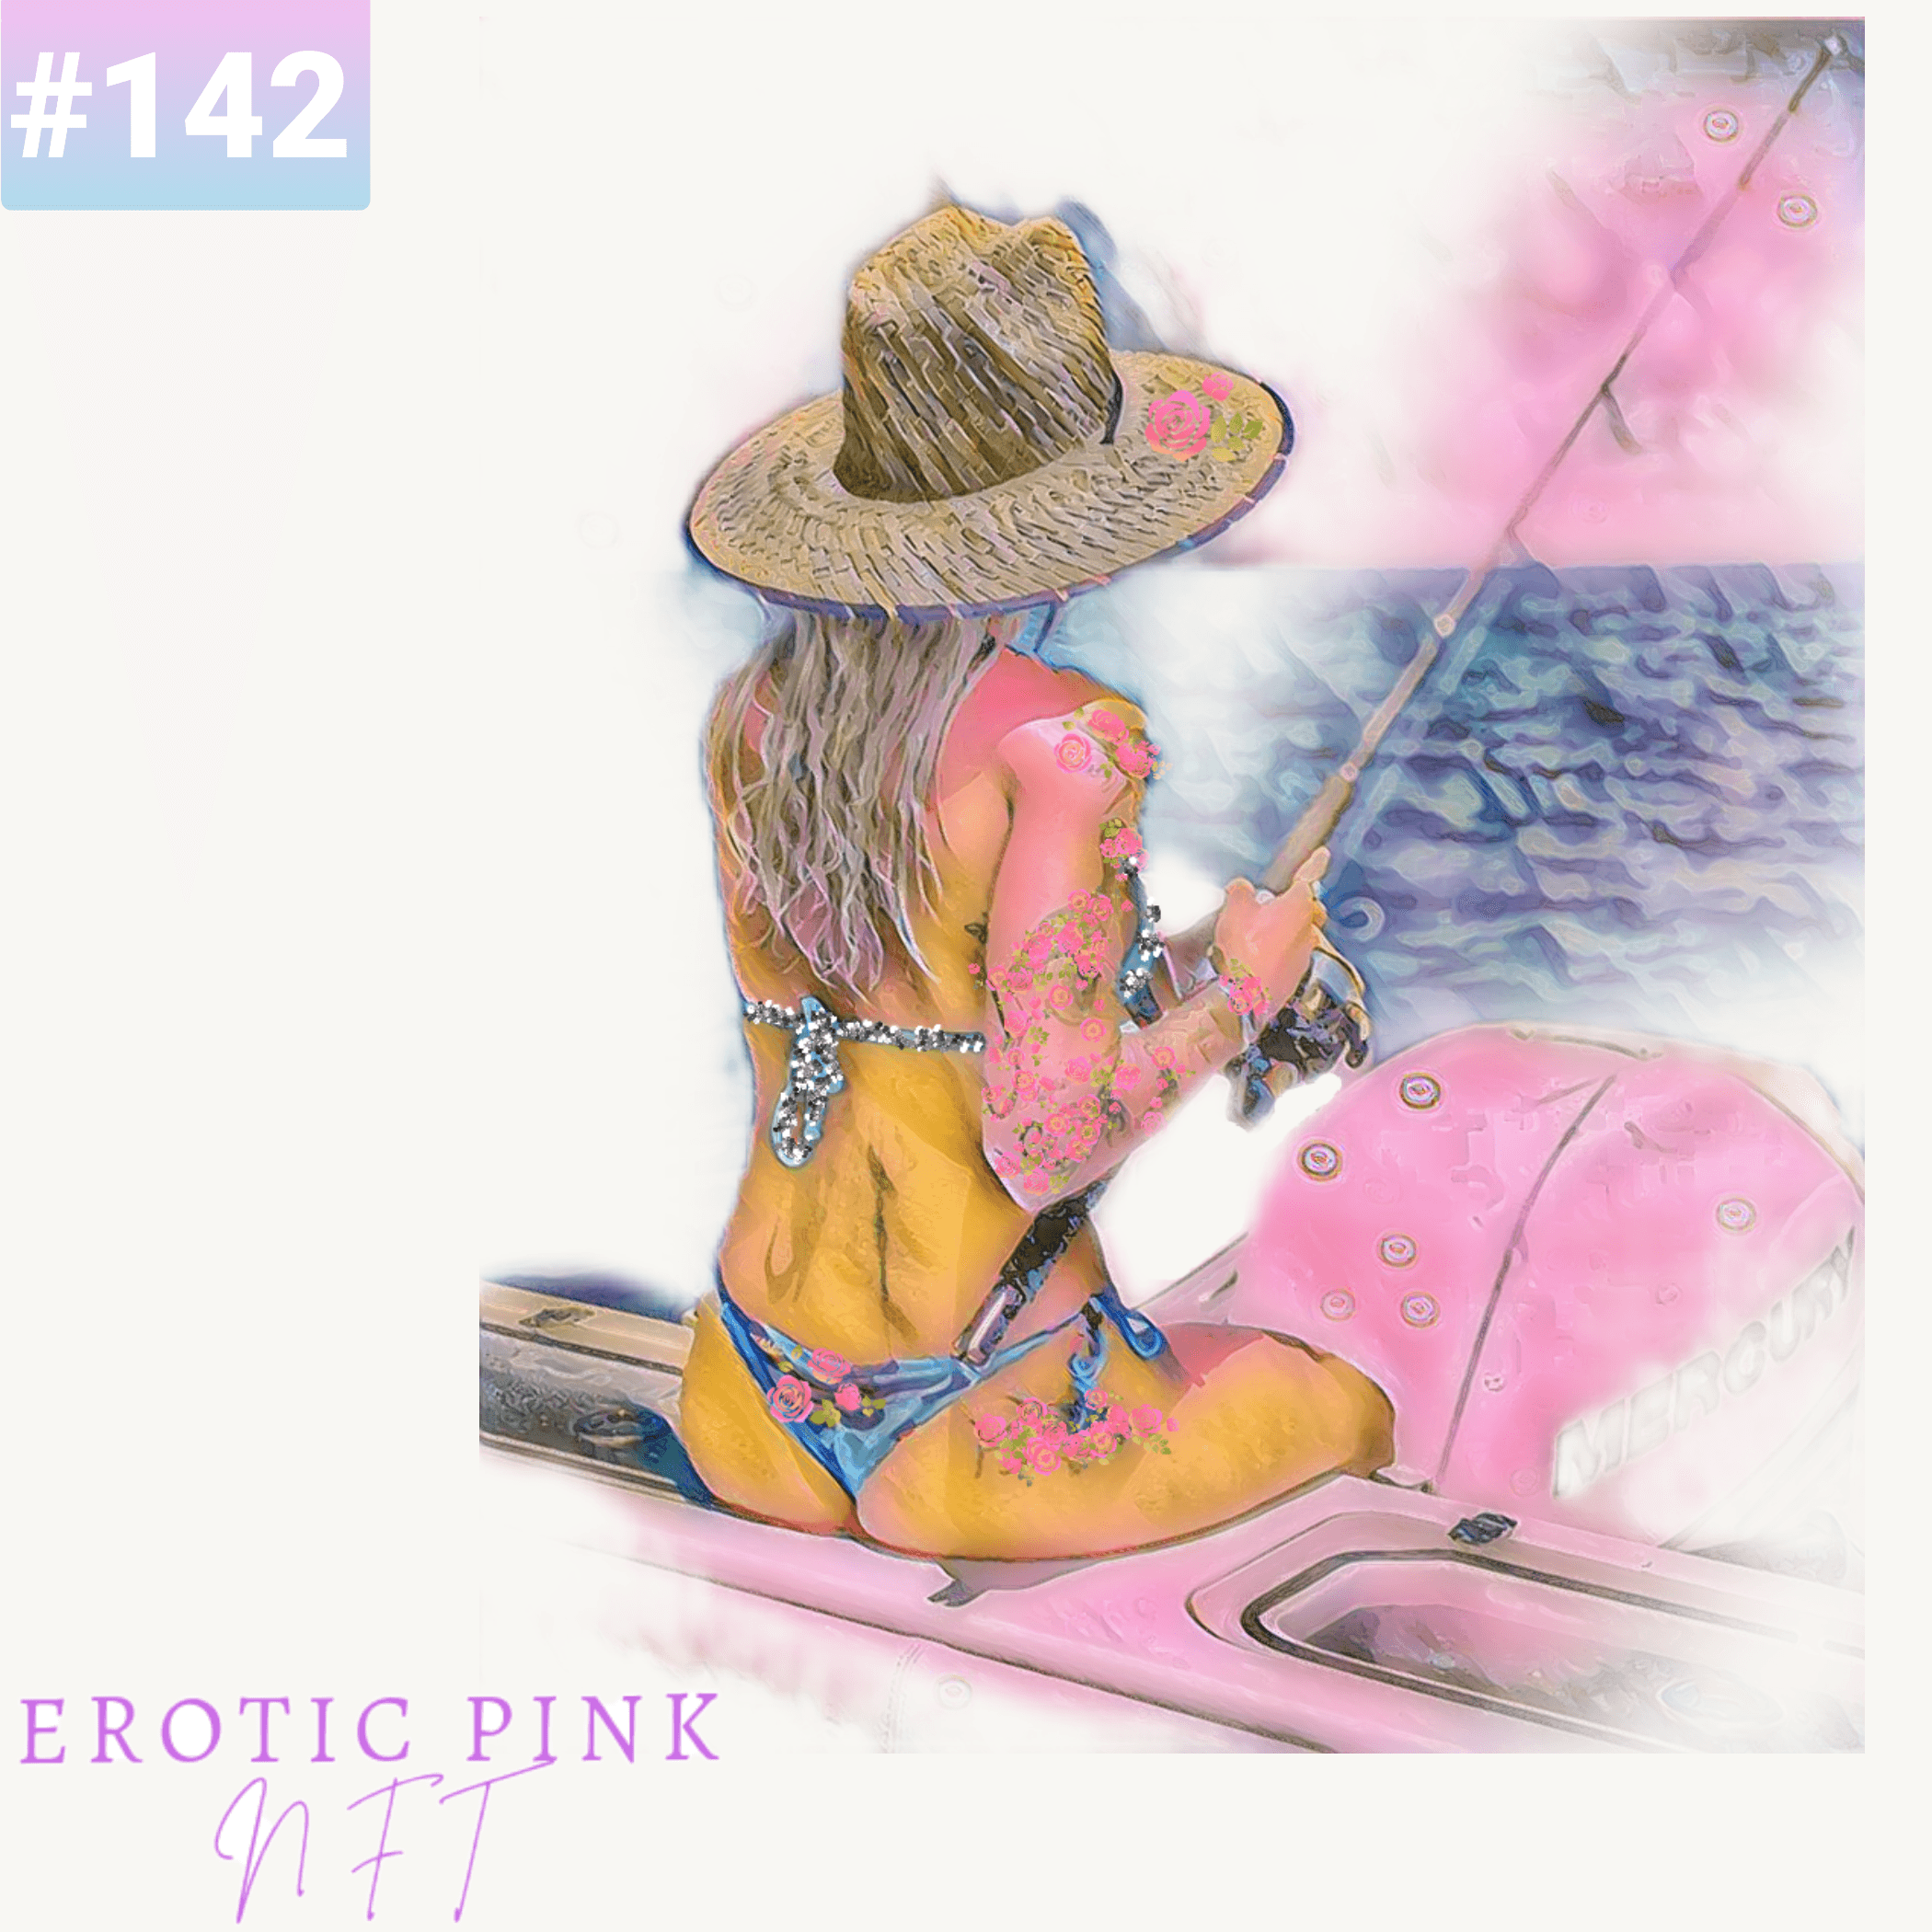 Erotic Pink #142